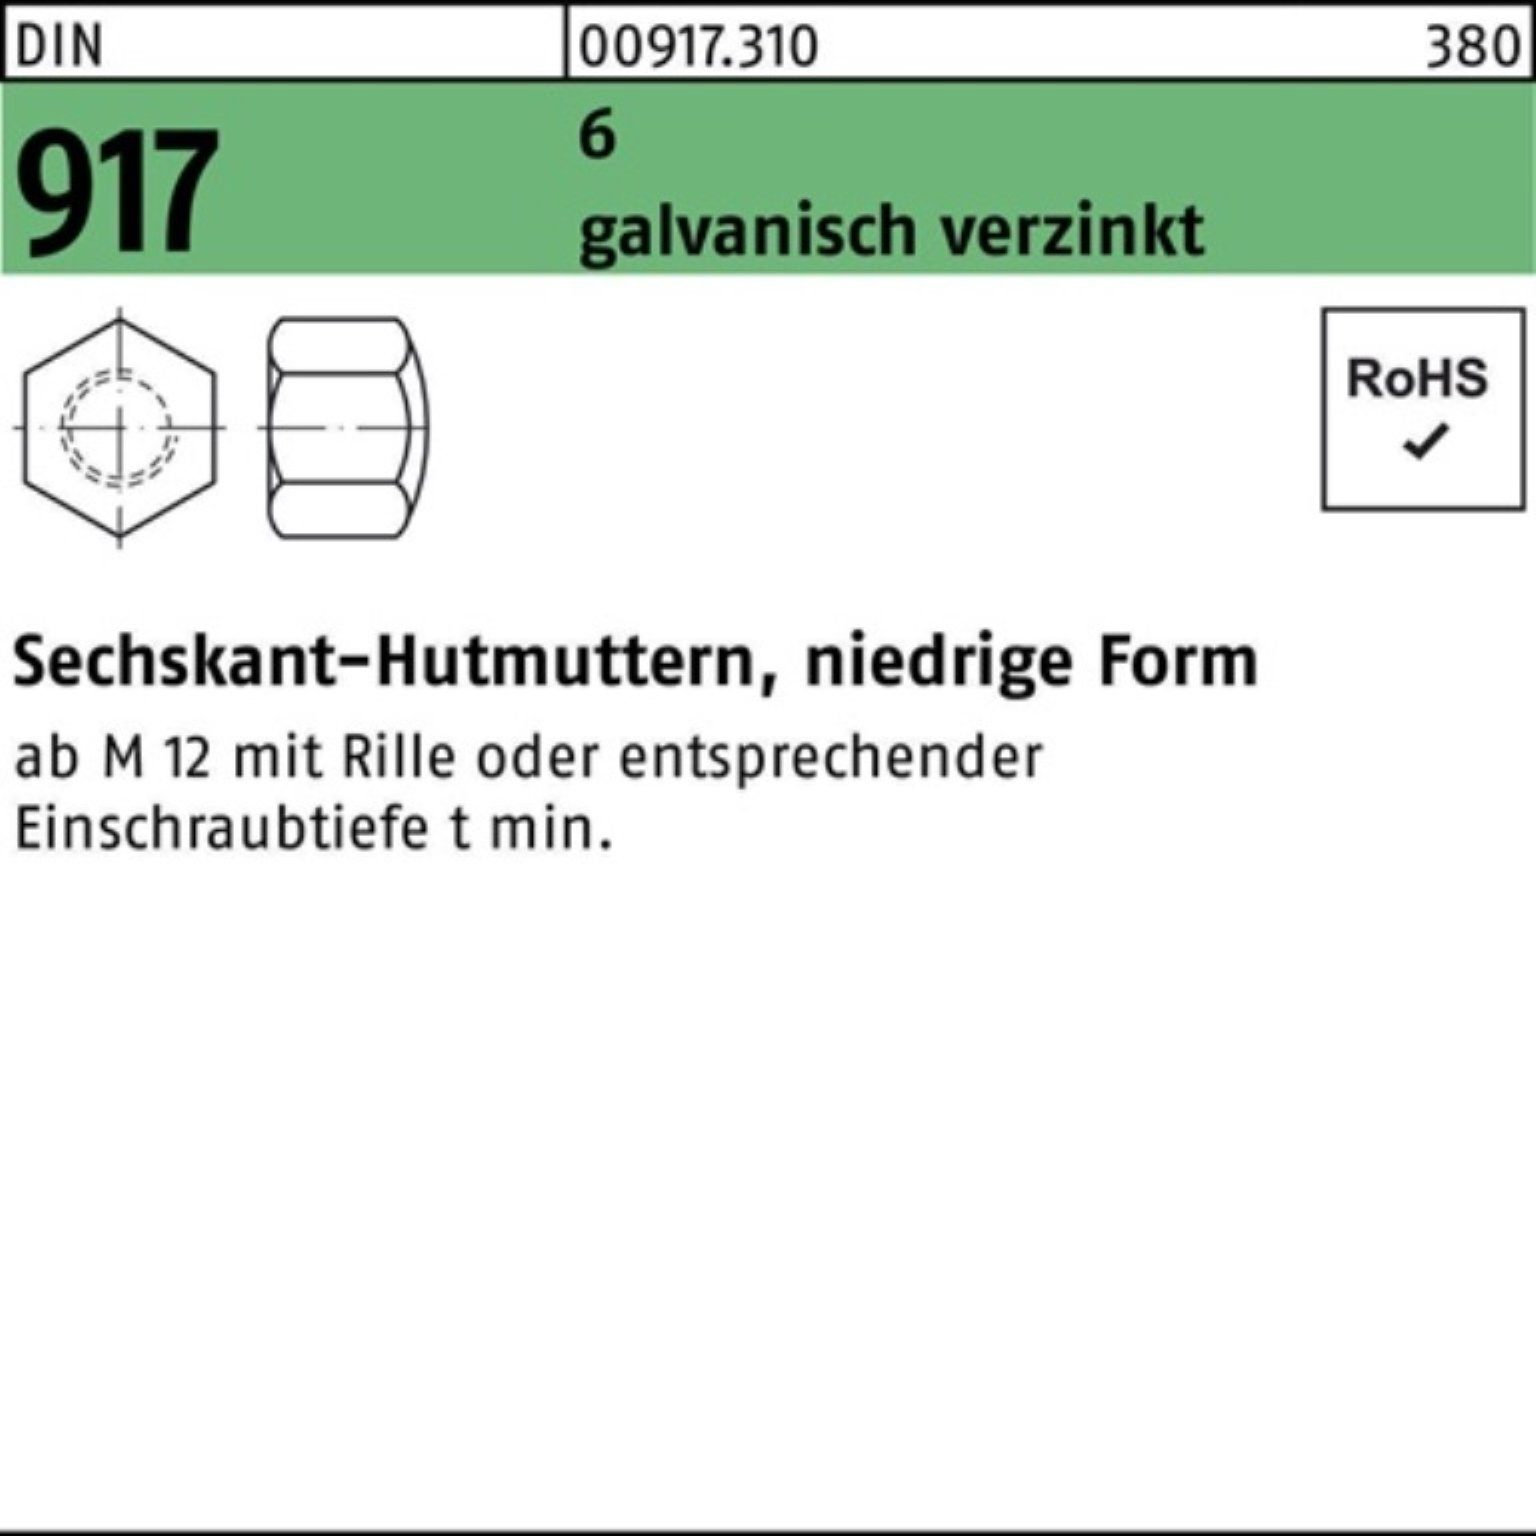 Hutmutter Reyher niedrige 1 FormM36 6 917 Sechskanthutmutter Pack 100er galv.verz. DIN